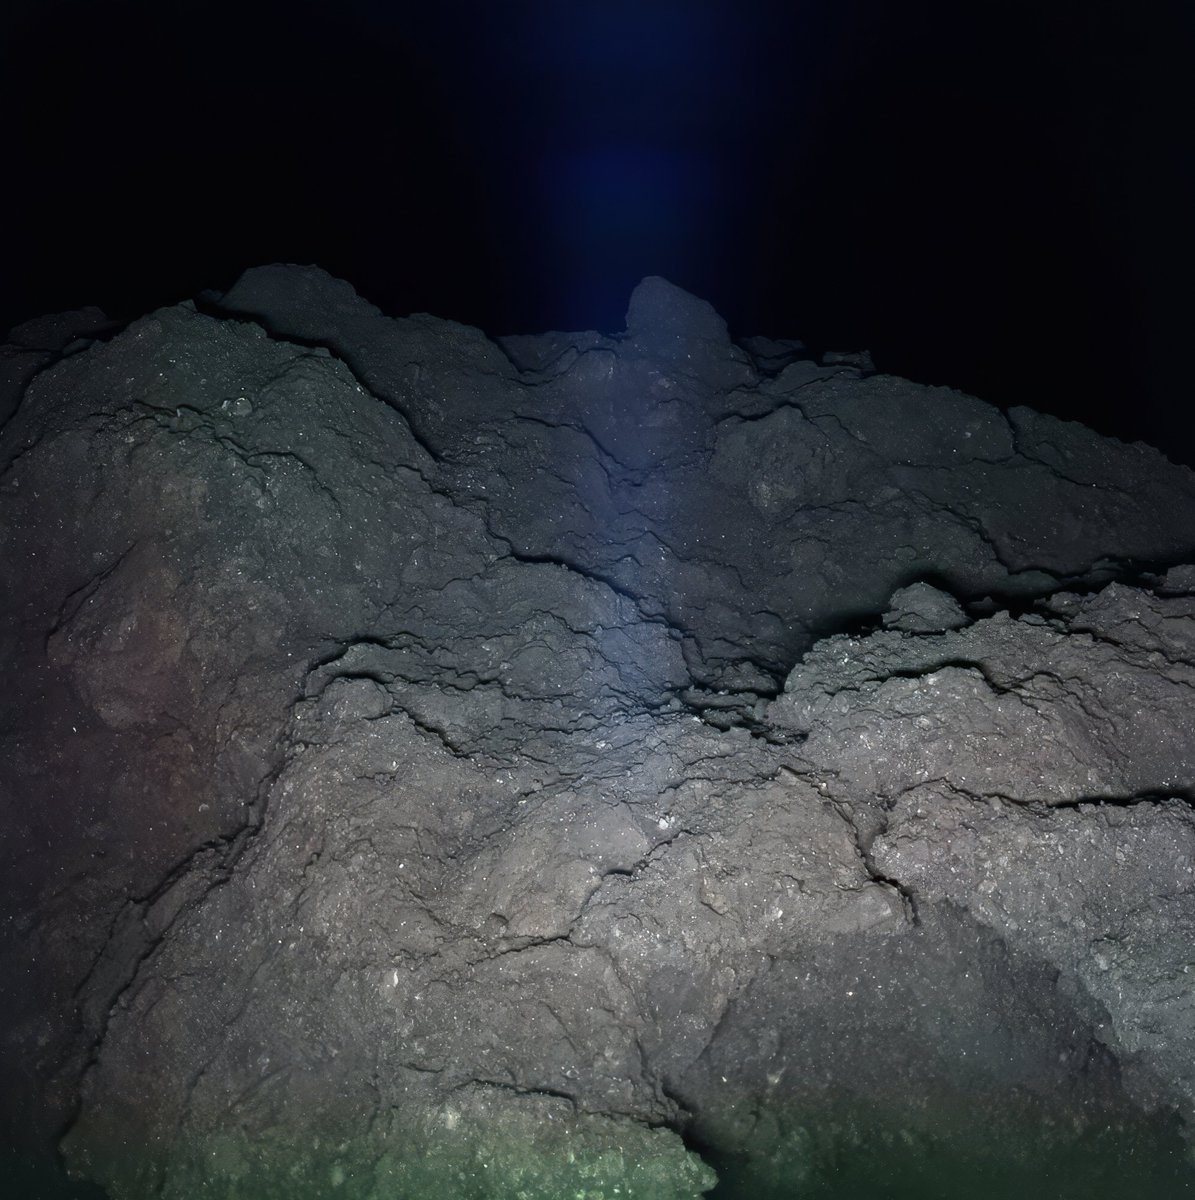 My favorite asteroid photo (Ryugu)